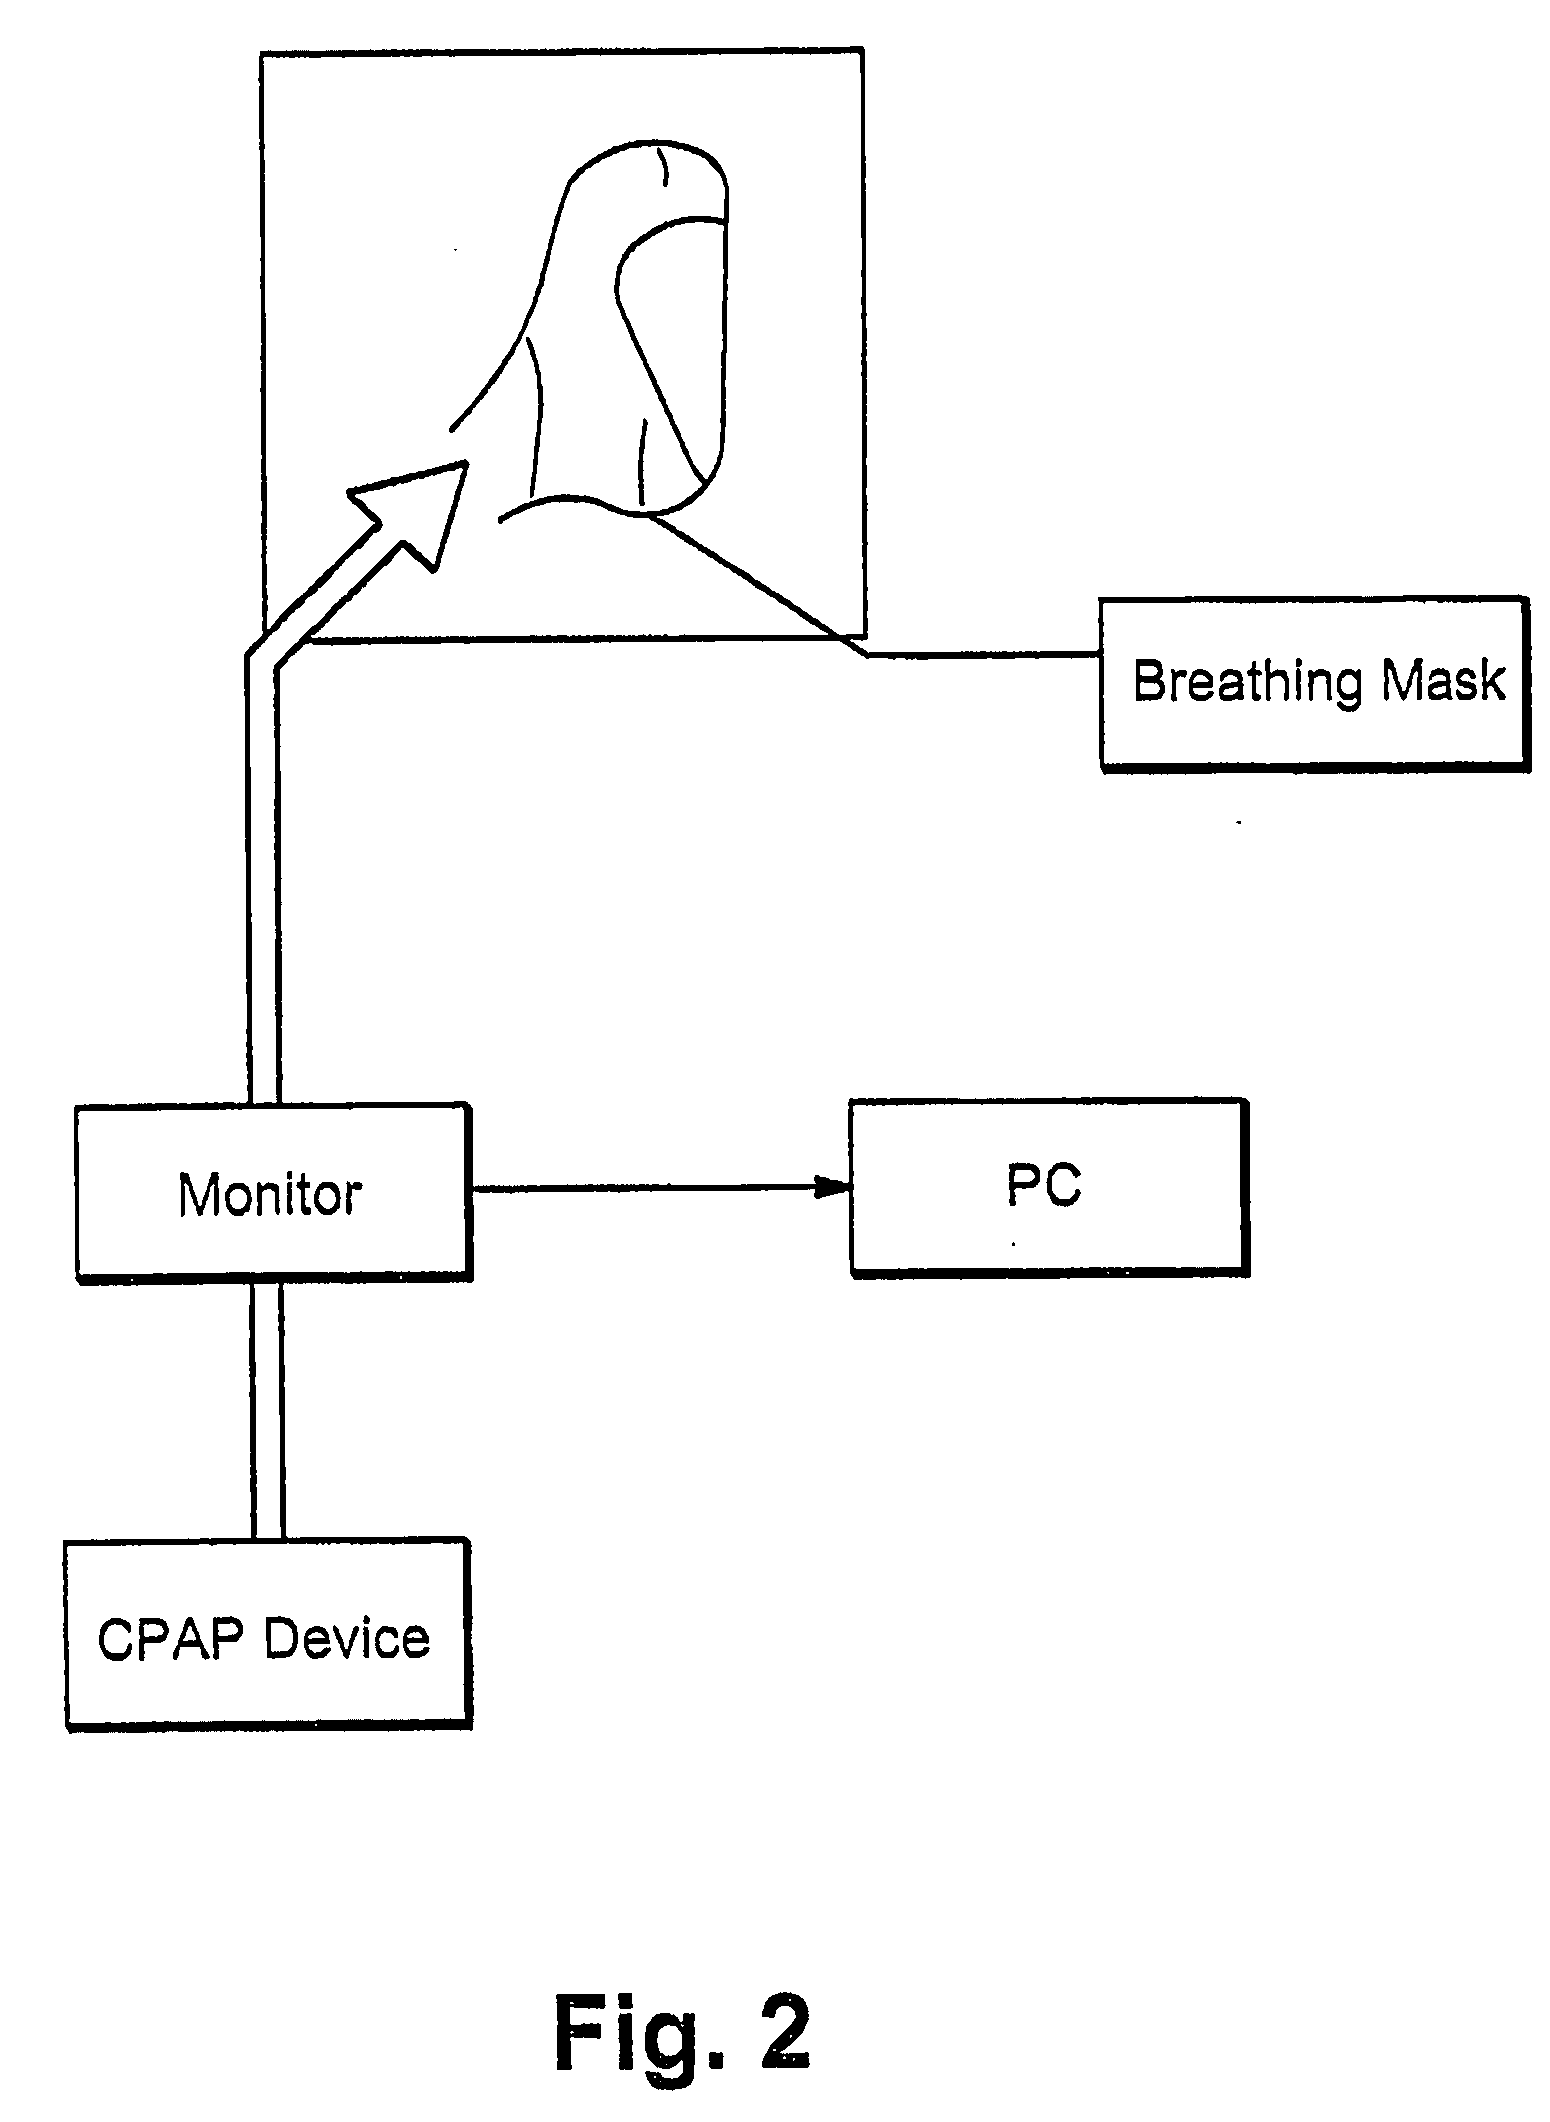 Monitor For Cpap/Ventilator Apparatus